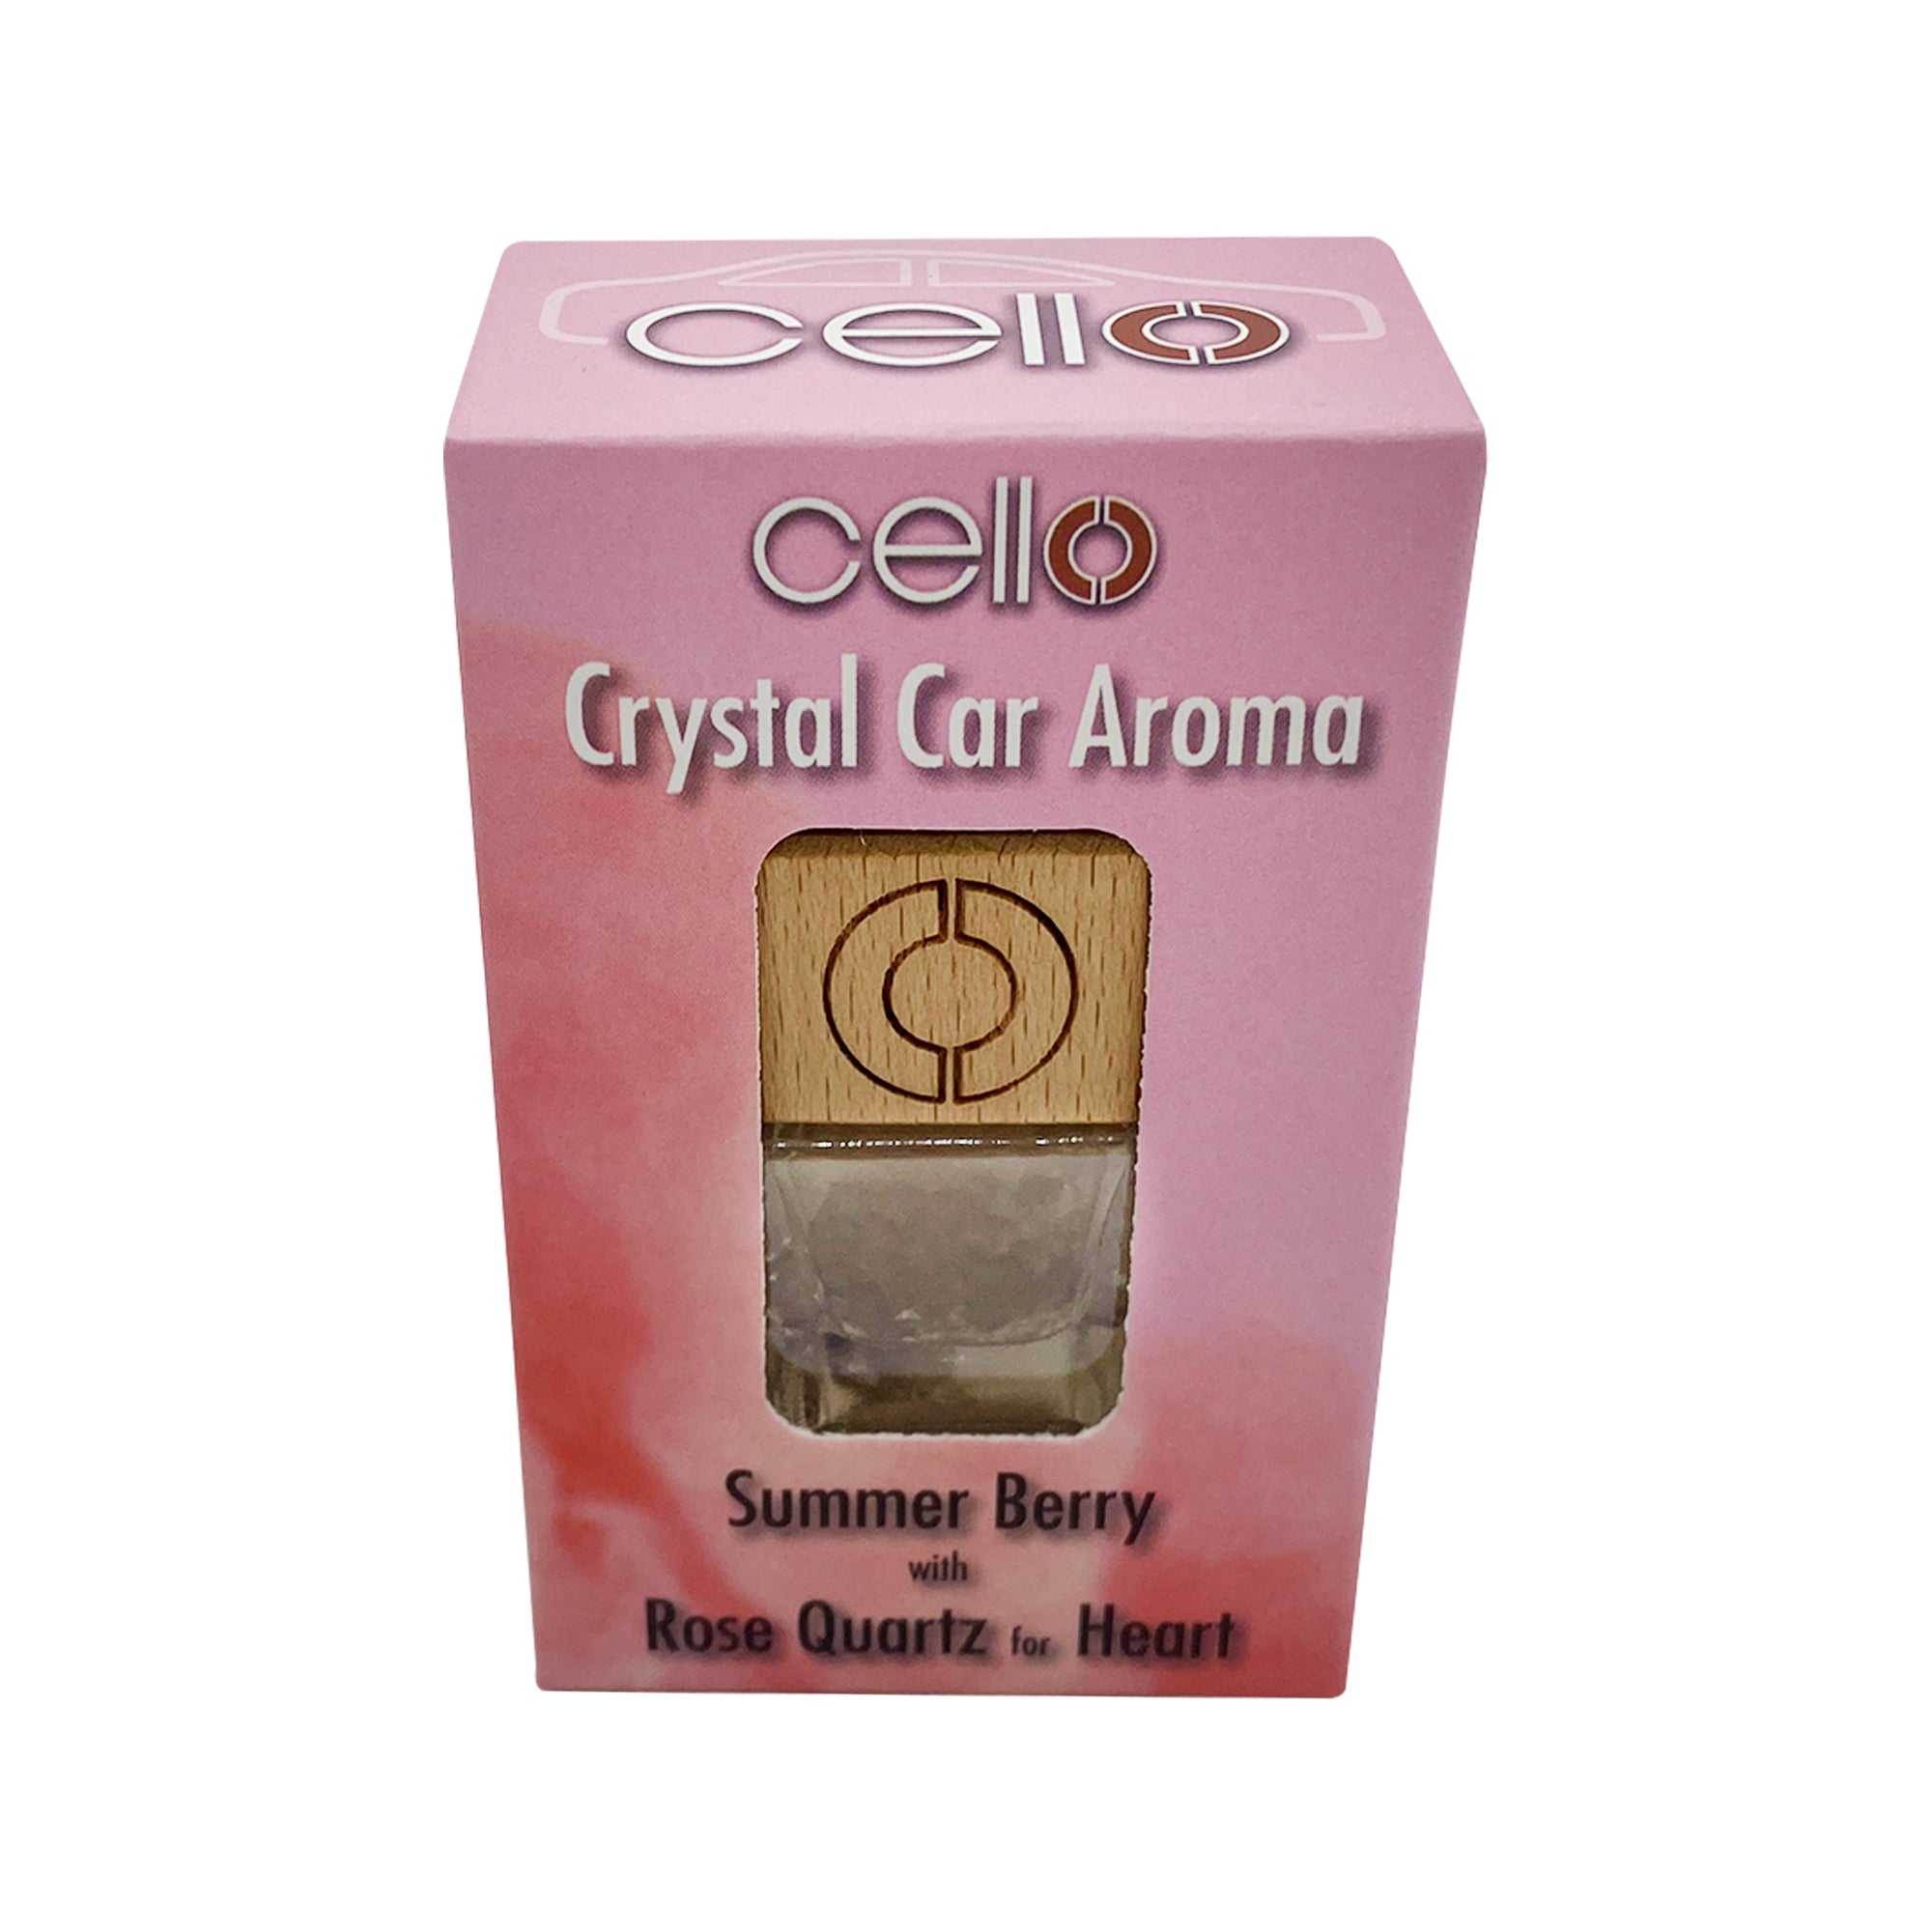 Cello - Crystal Car Aroma - Rose Quartz - Summer Berry